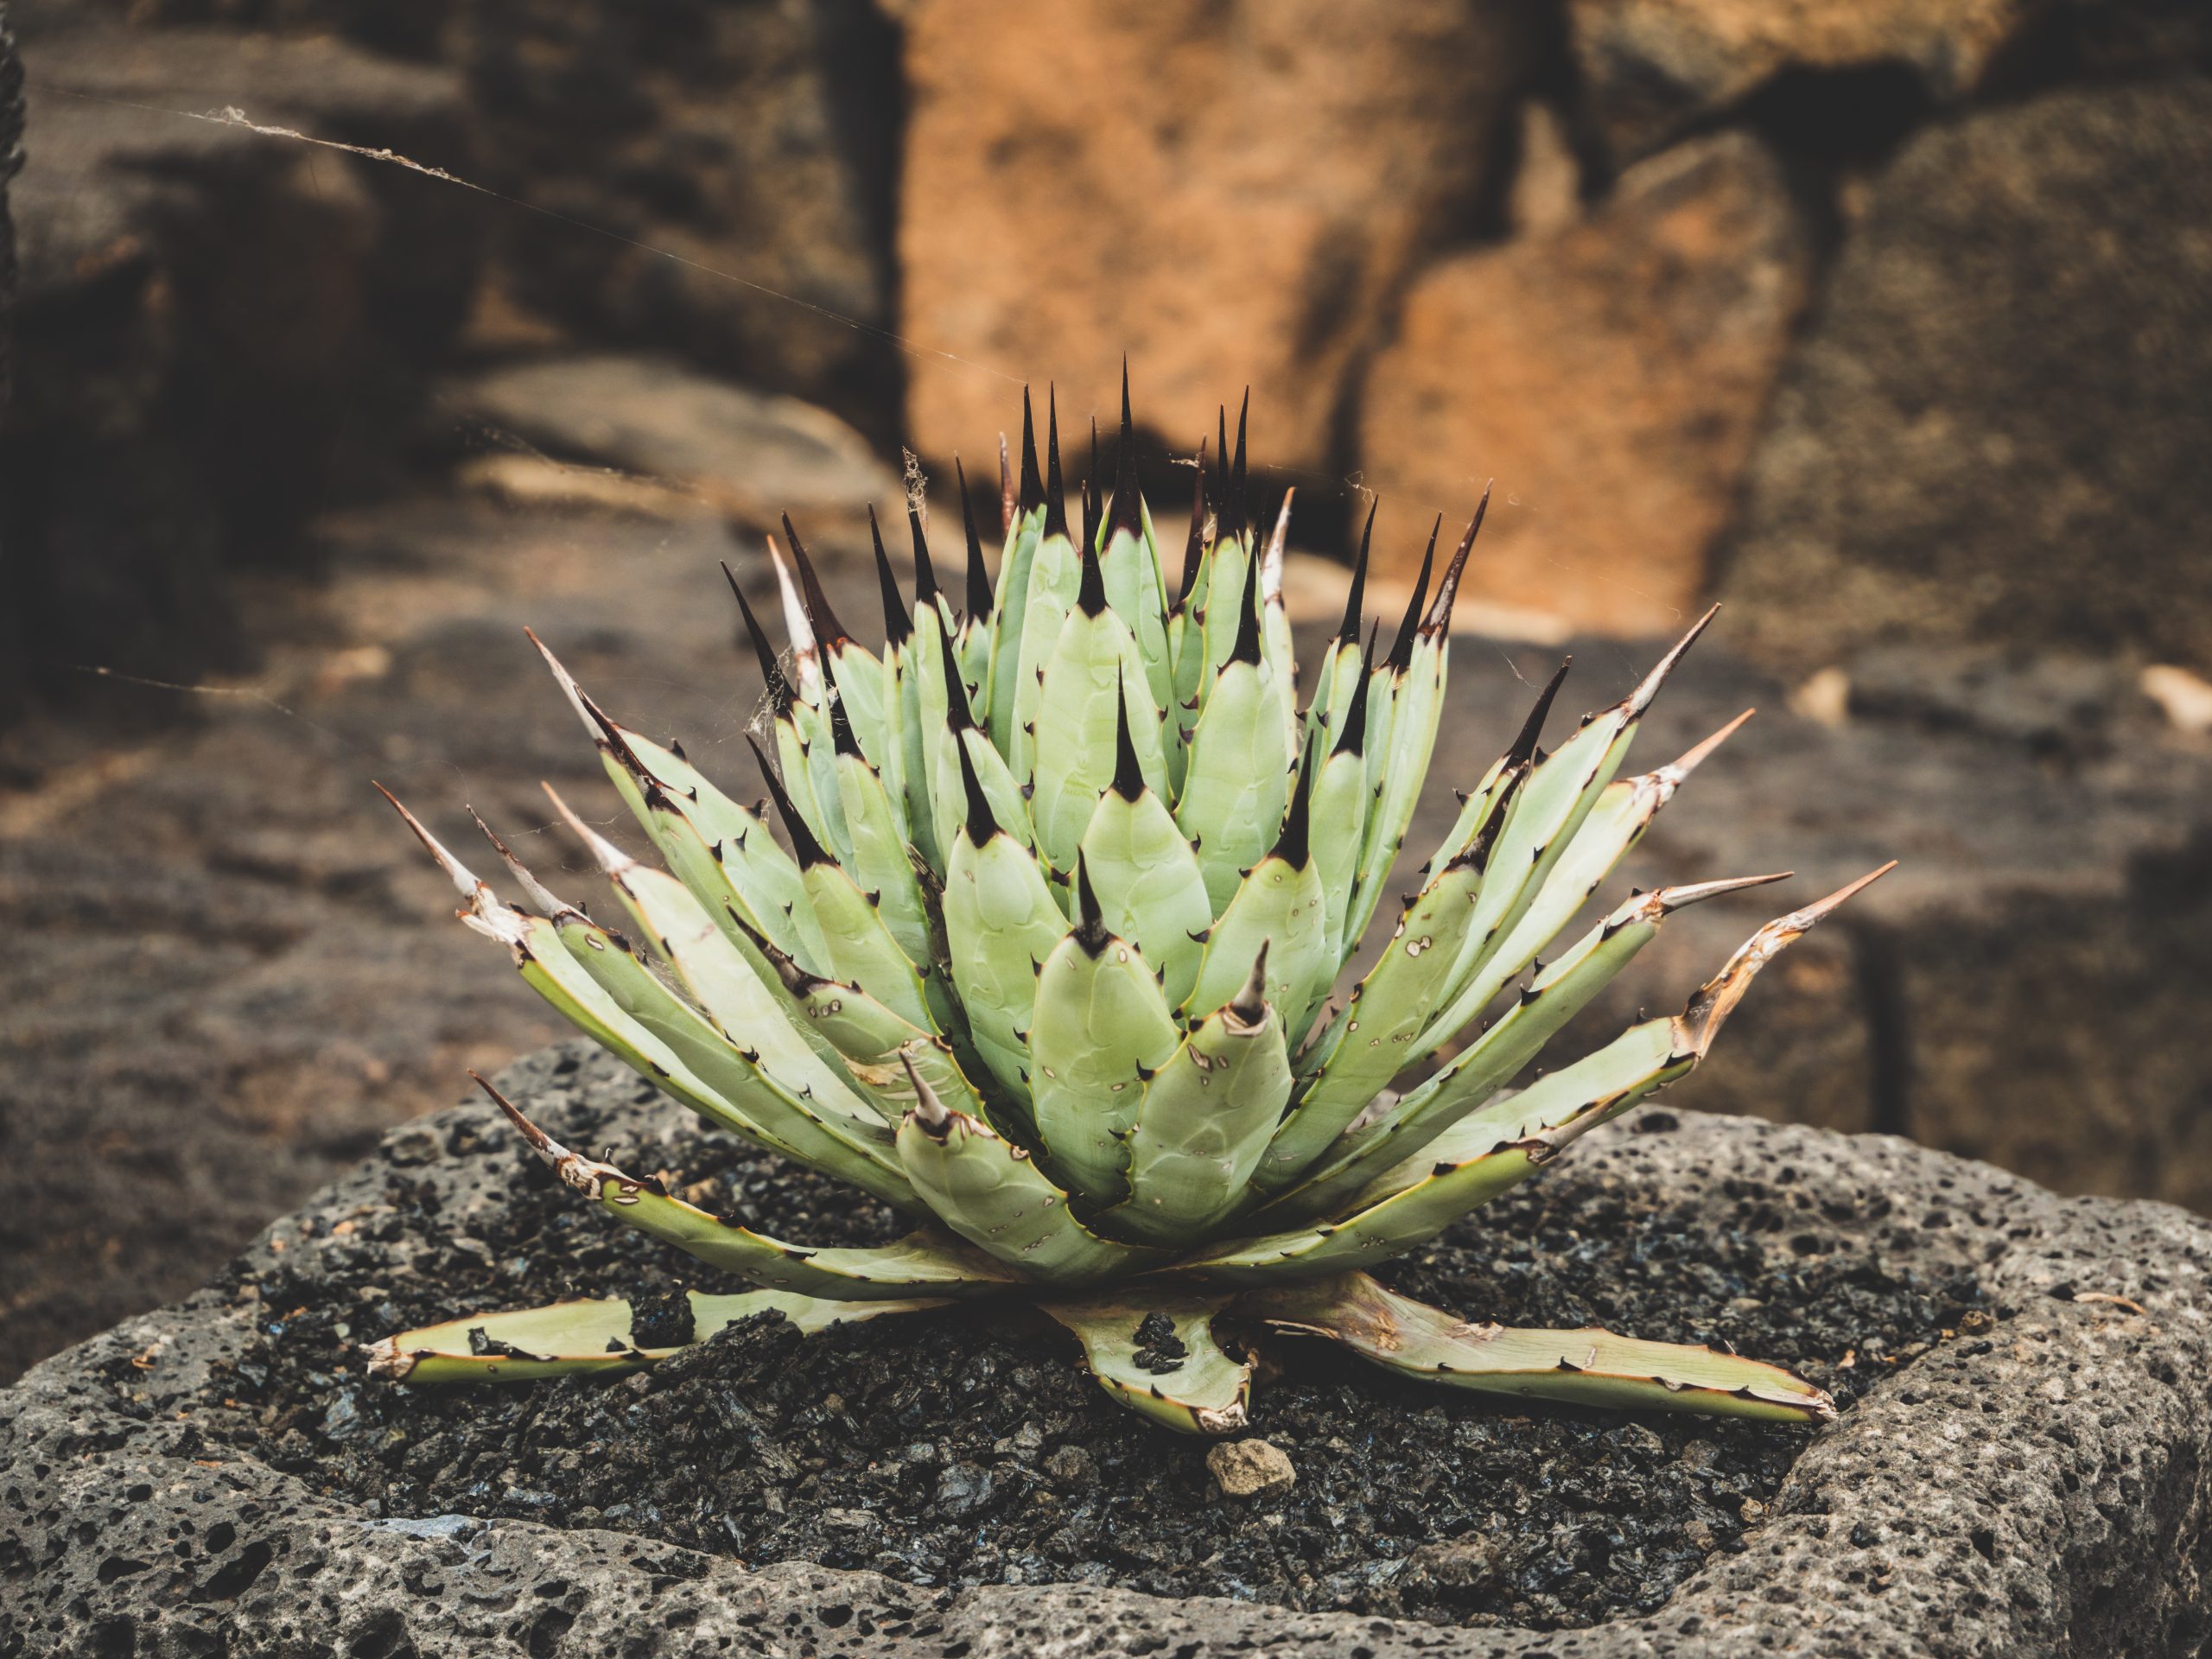 Lors de la balade de nombreuses espèces de cactus sont visibles